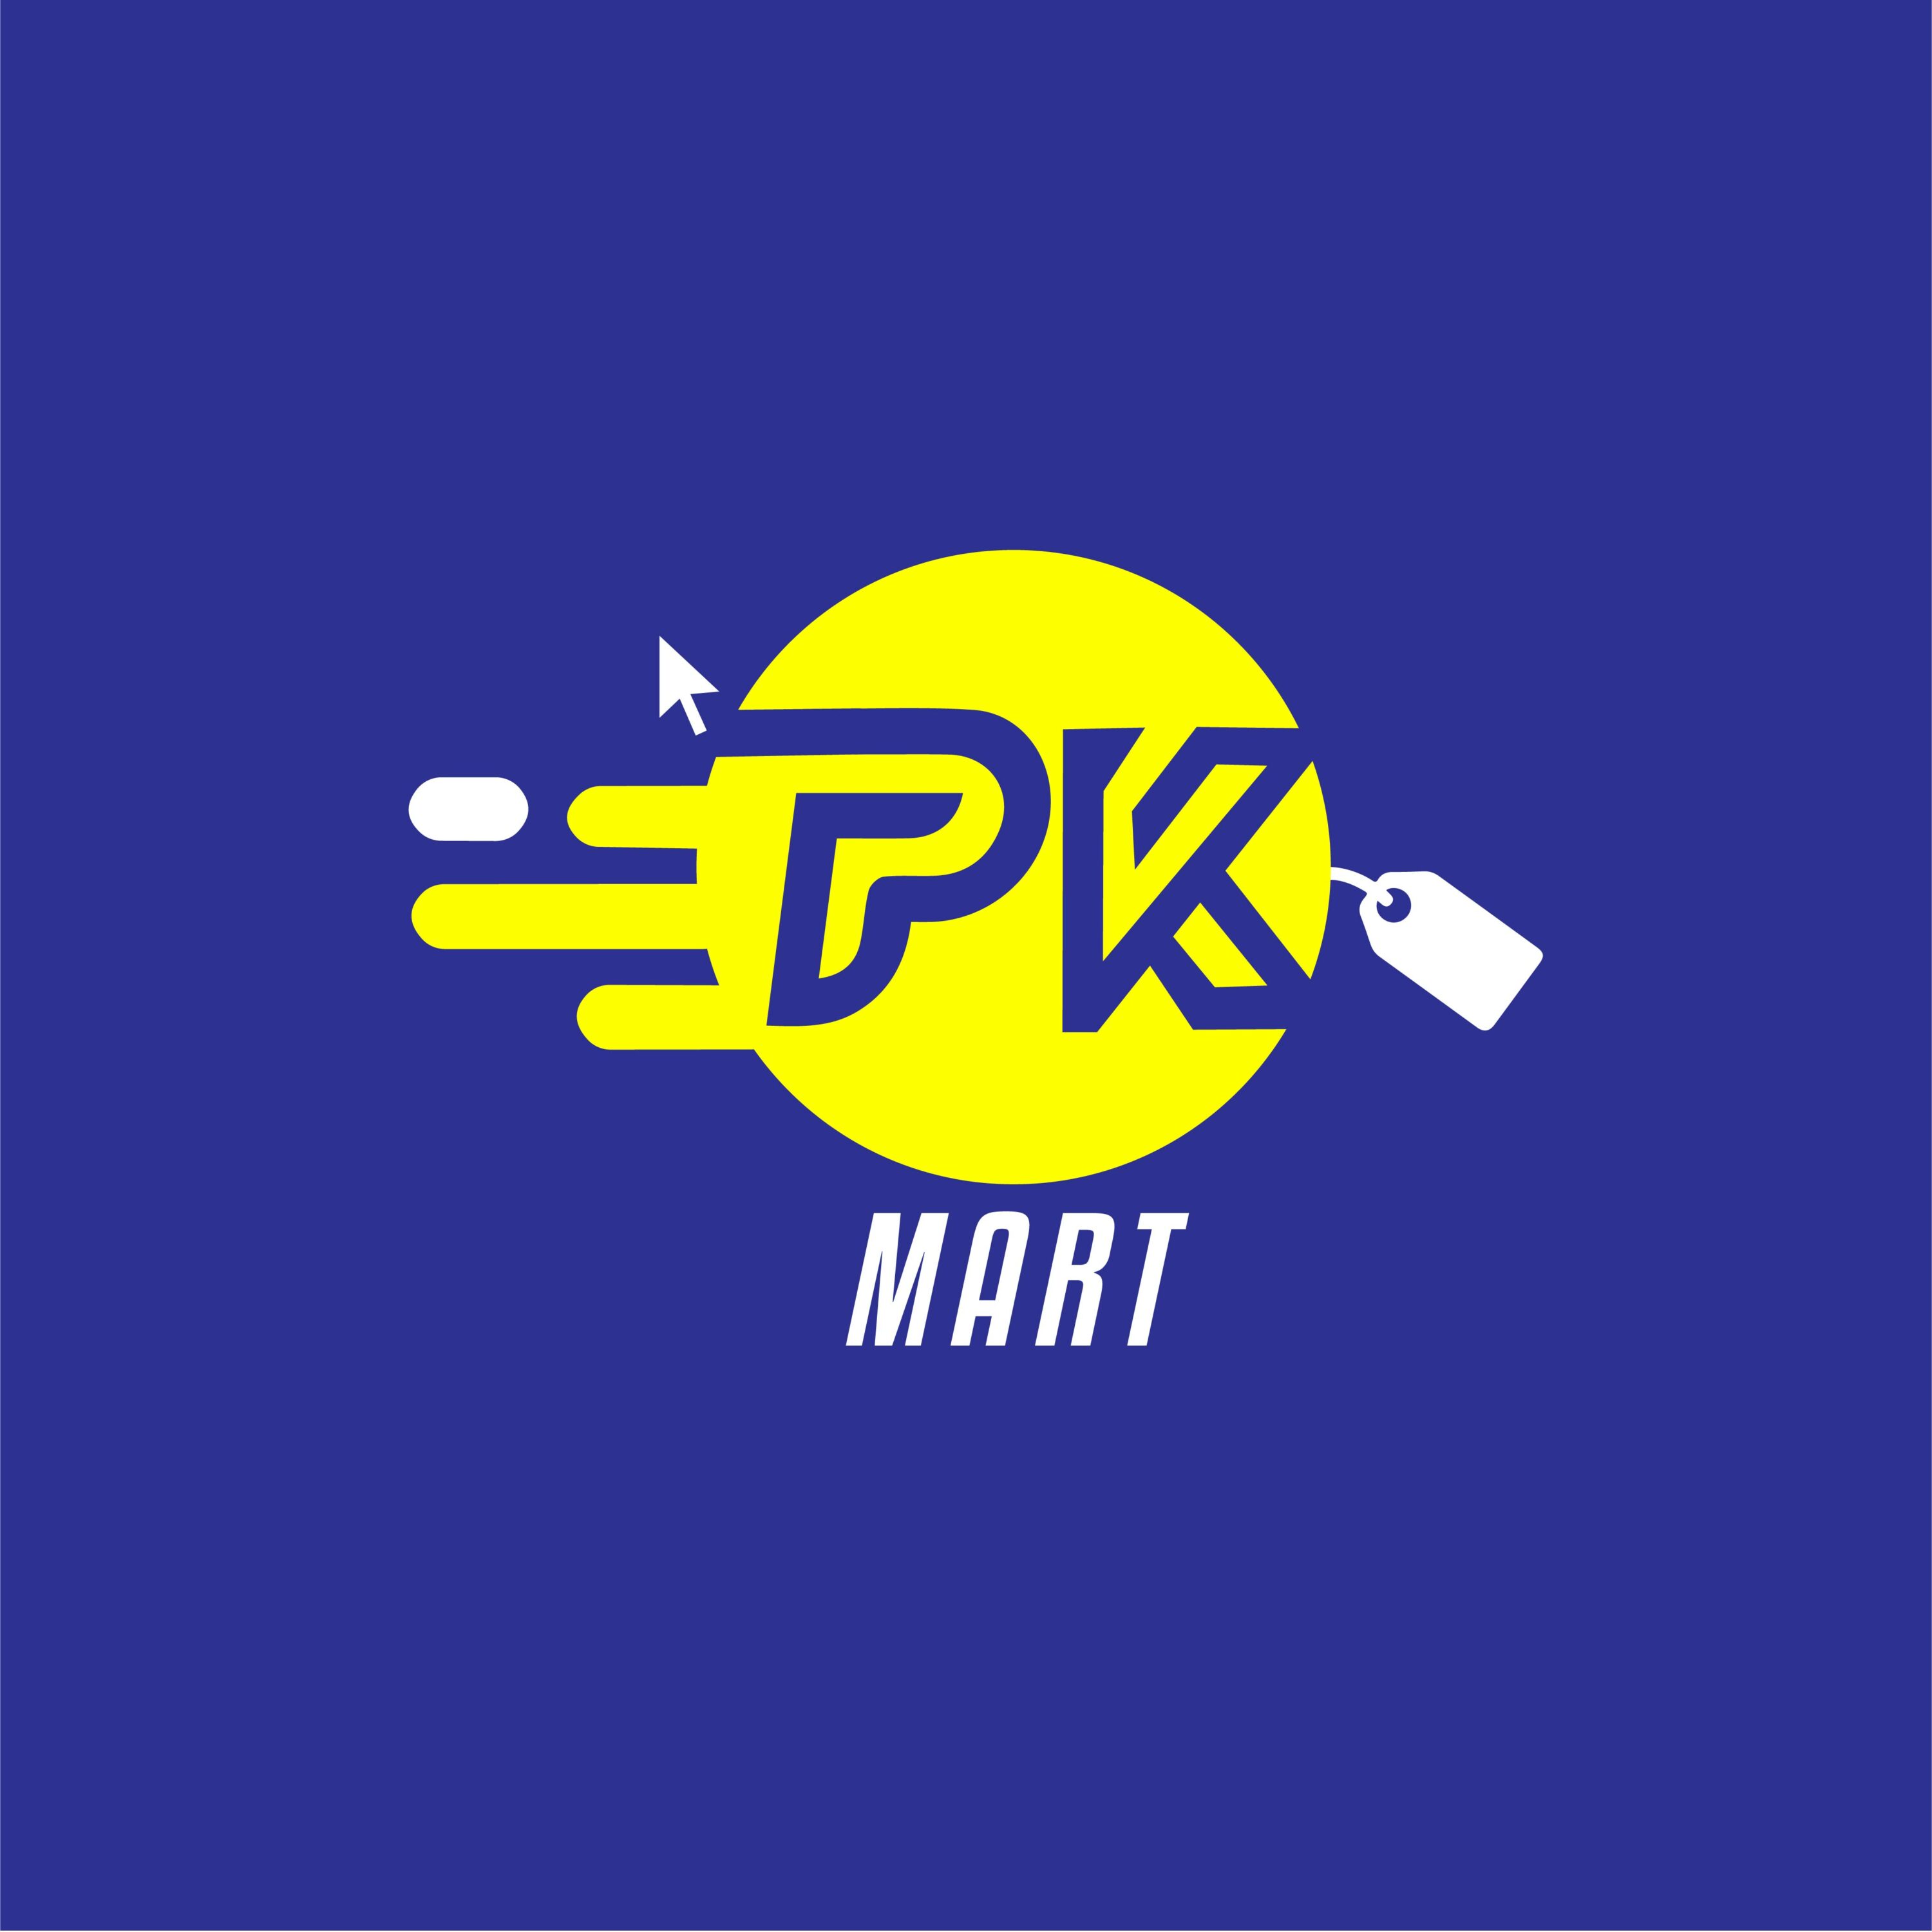 PK Mart Logo Template cover image.